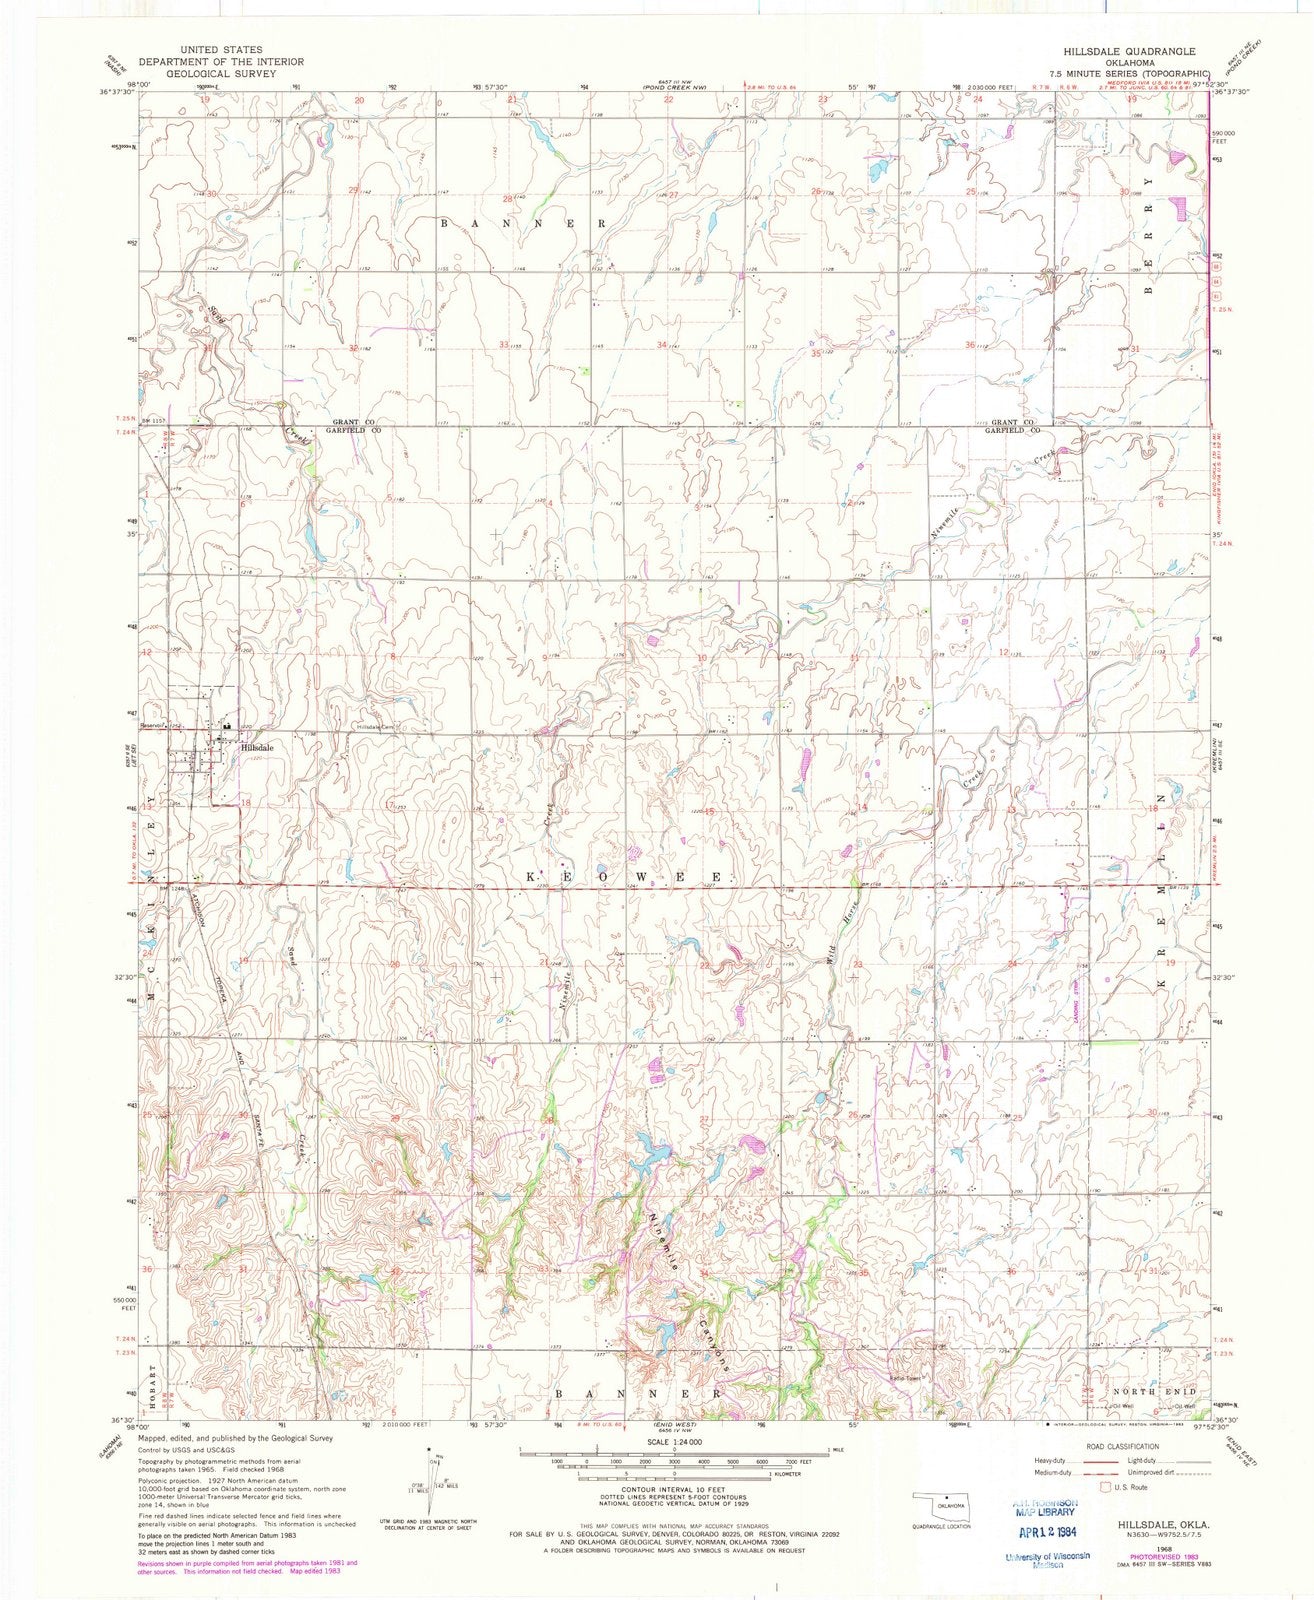 1968 Hillsdale, OK - Oklahoma - USGS Topographic Map